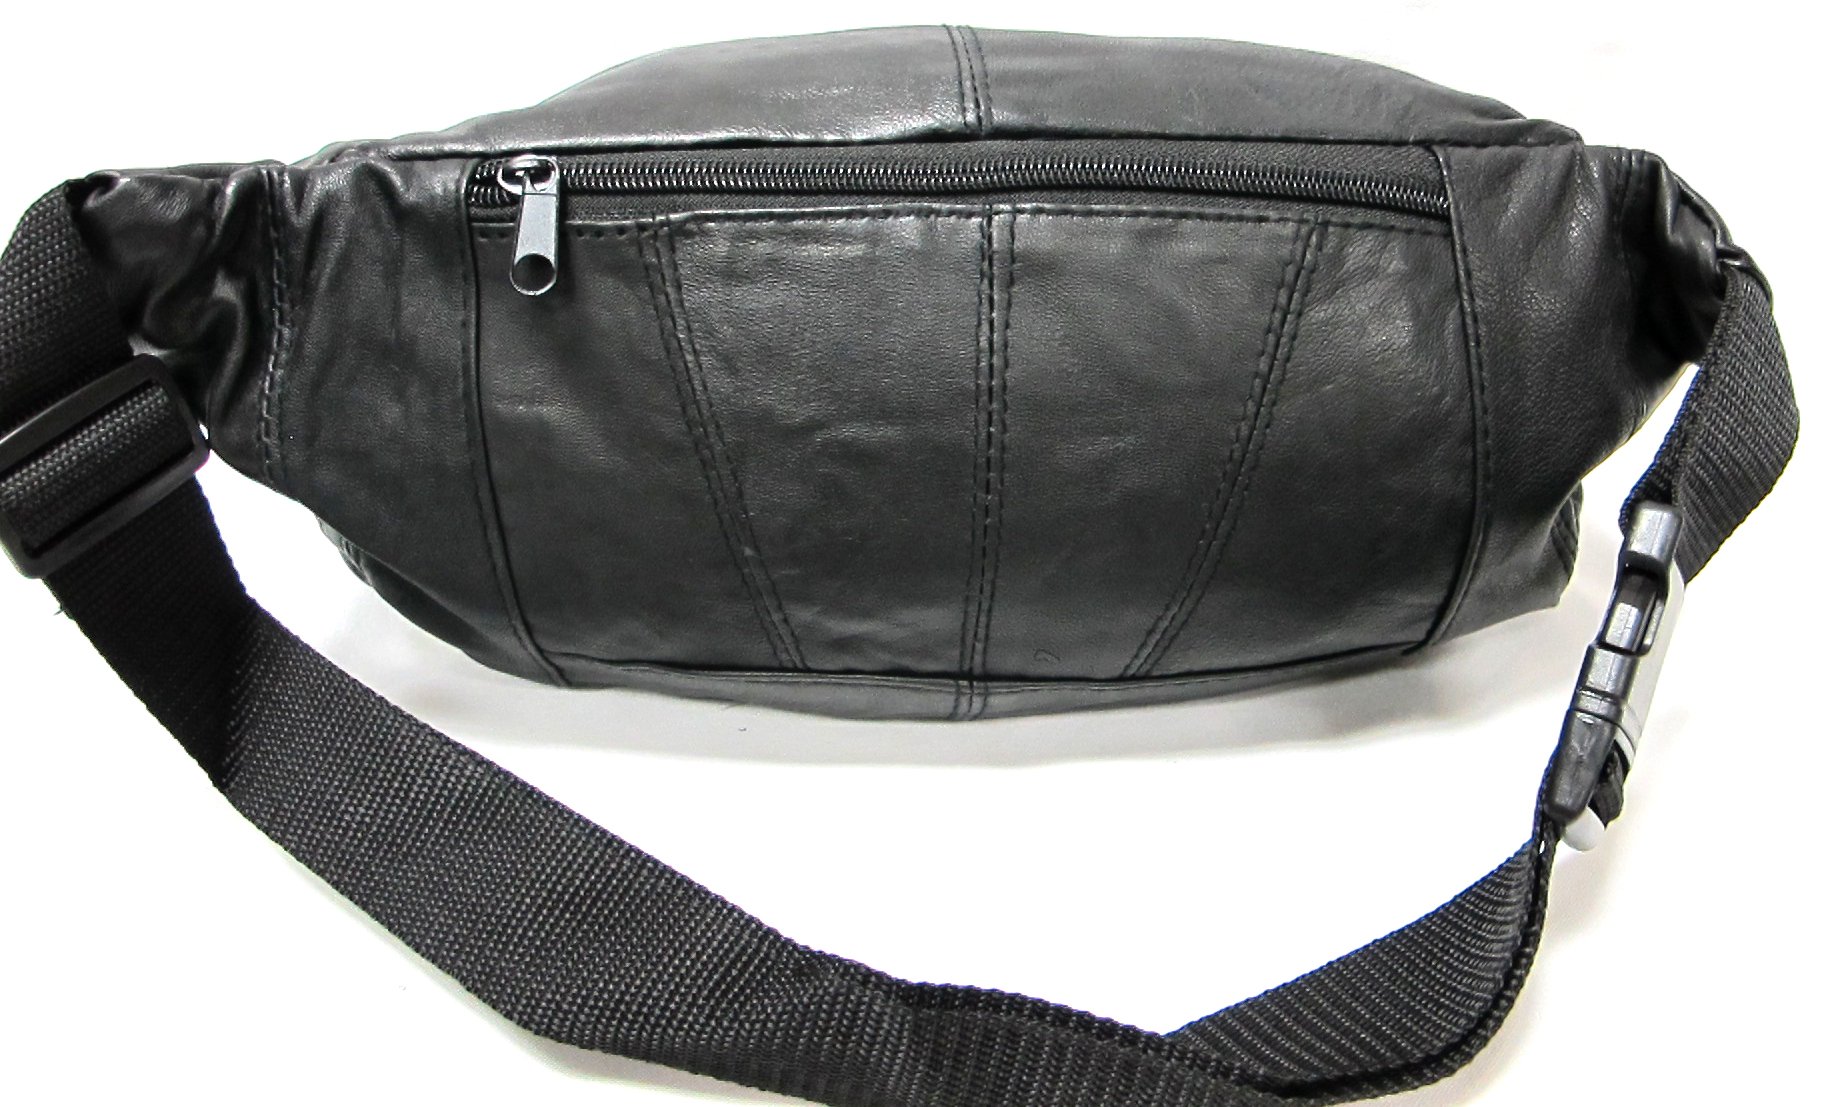 Deluxe Jumbo Size Genuine Leather Waist Pack Soft Light Weight w/Organizer - Black